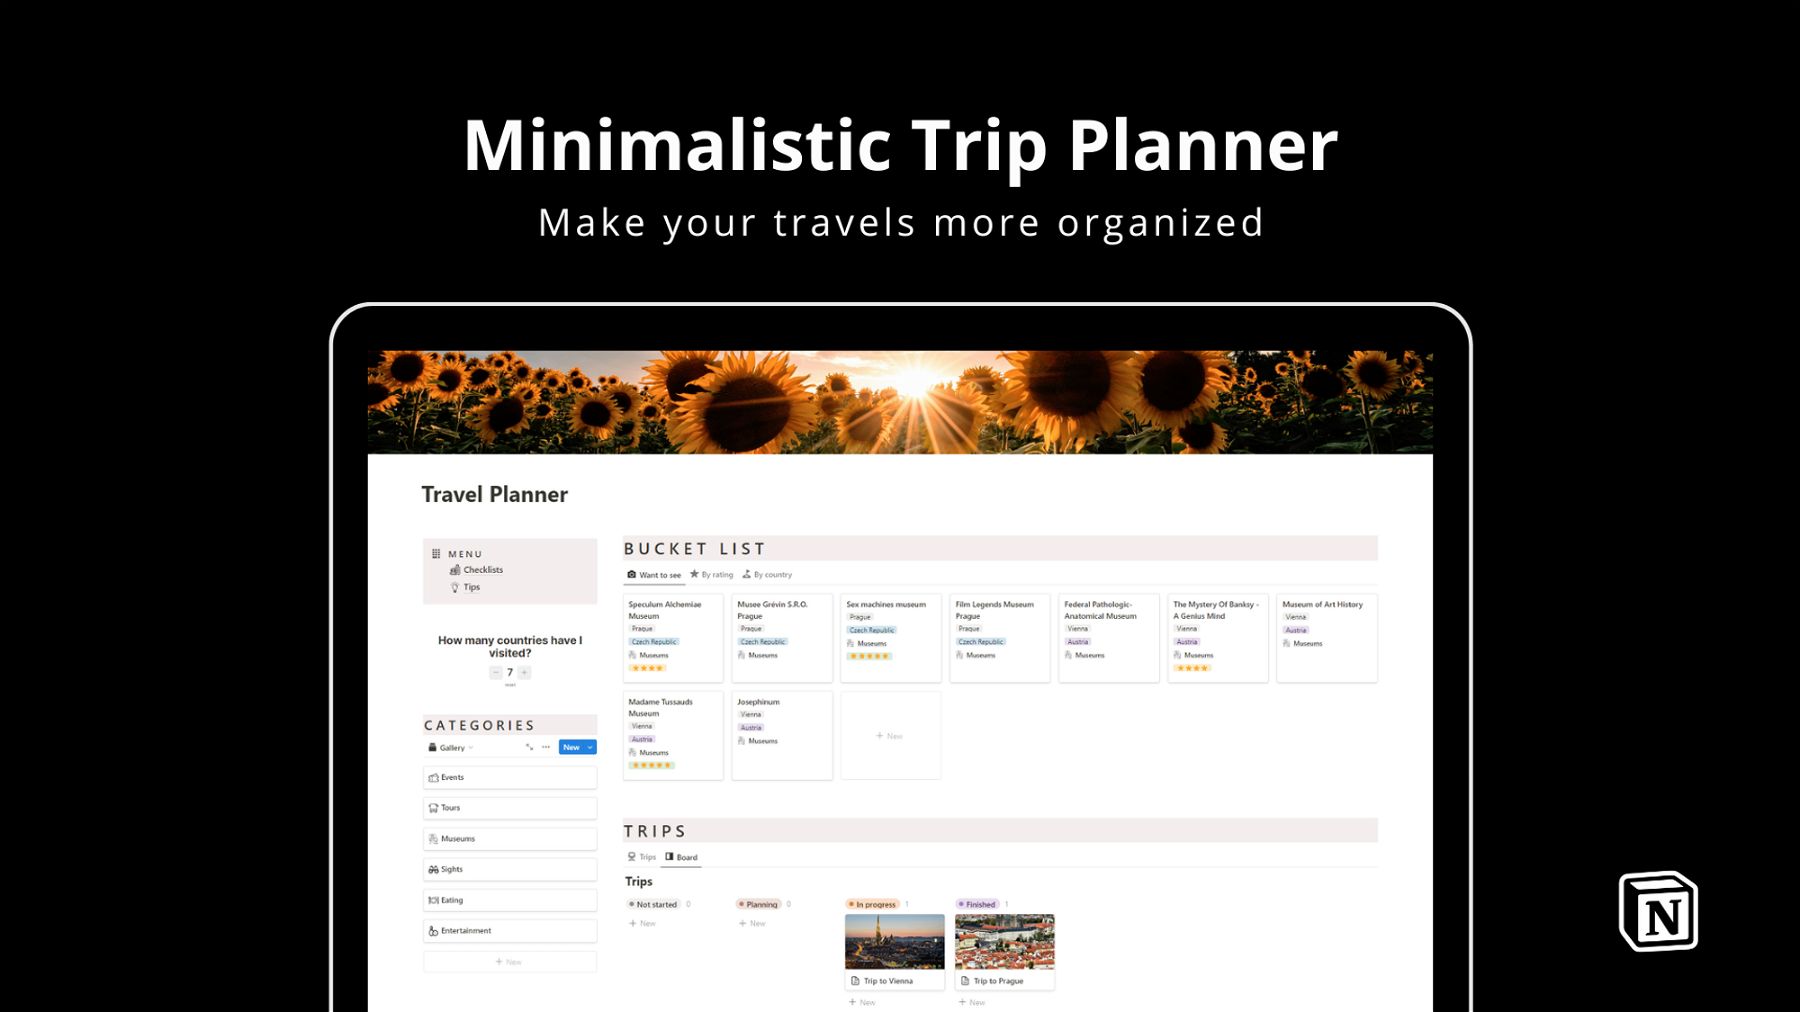 [Notion] Minimalistic trip planner